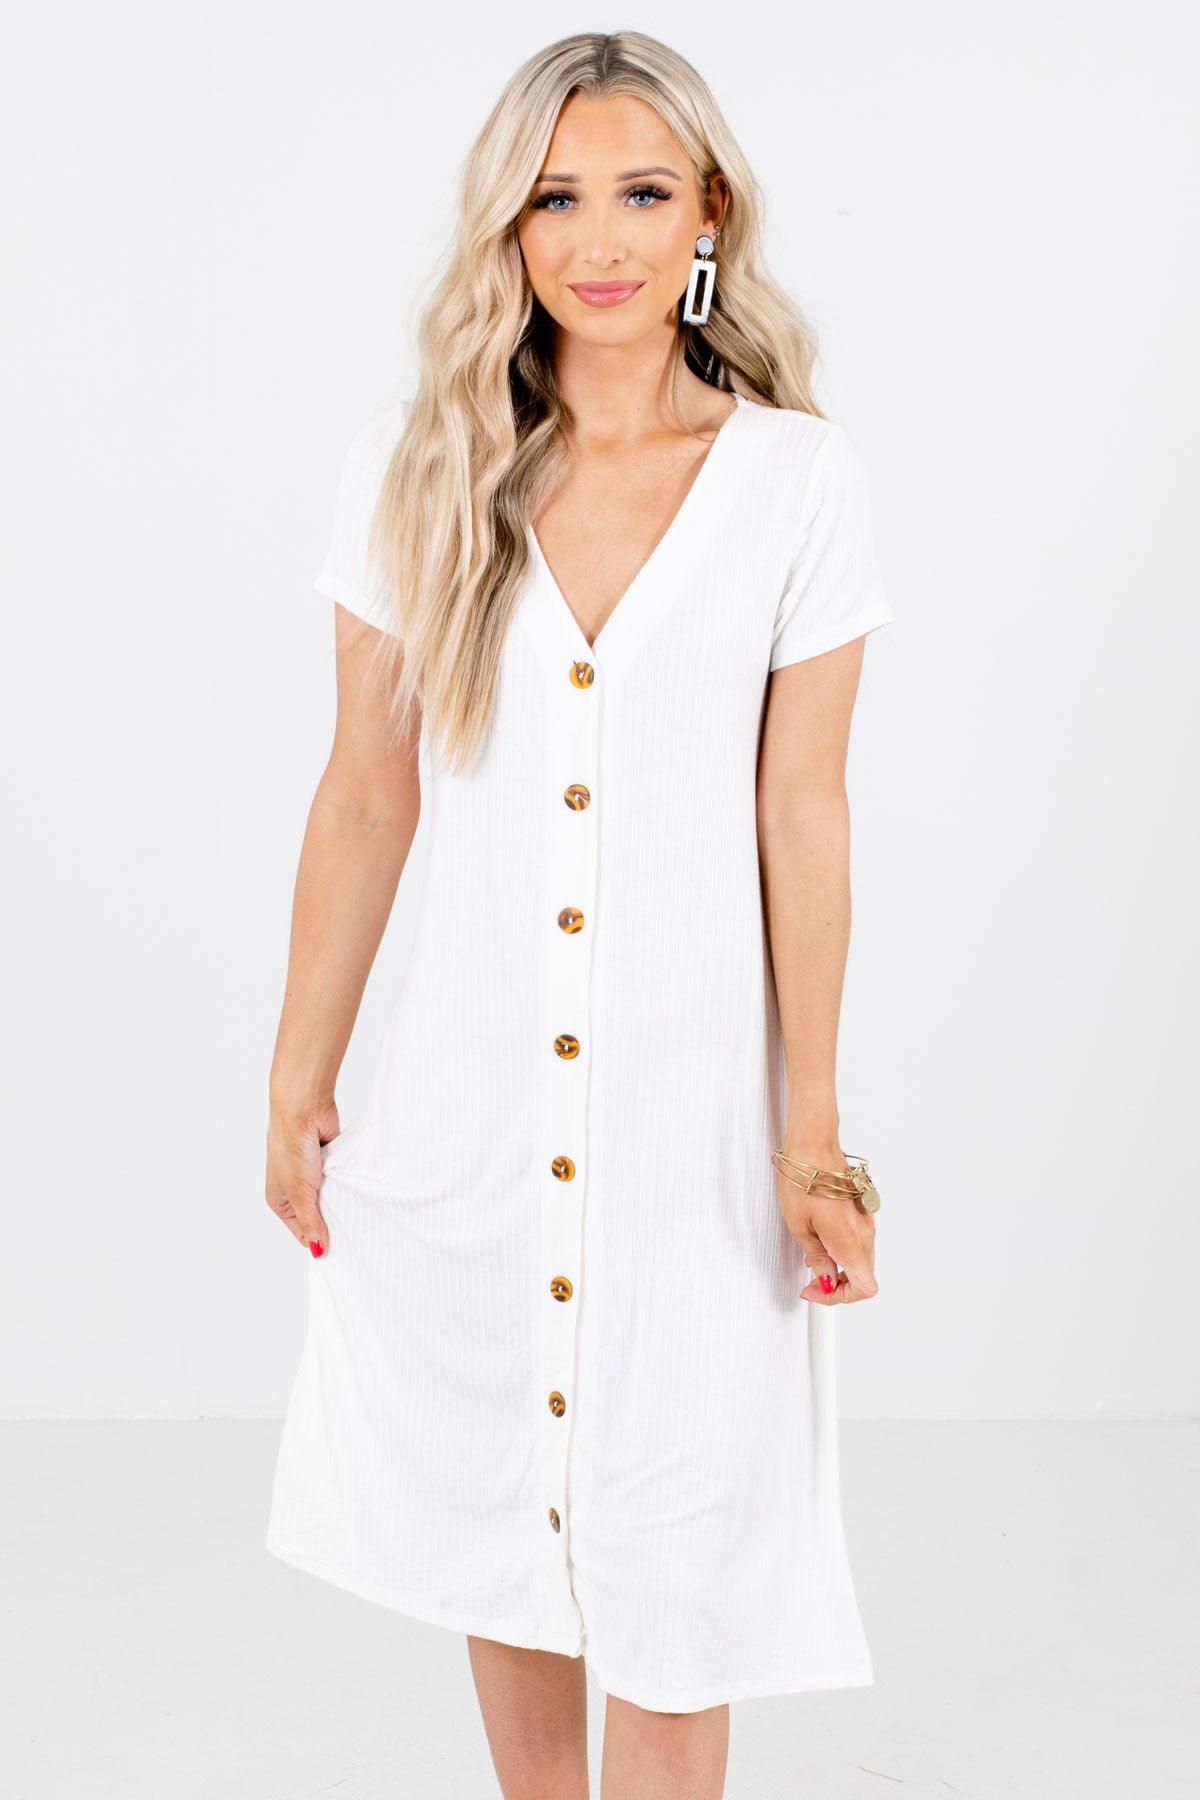 Women's White Flowy Silhouette Boutique Midi Dress